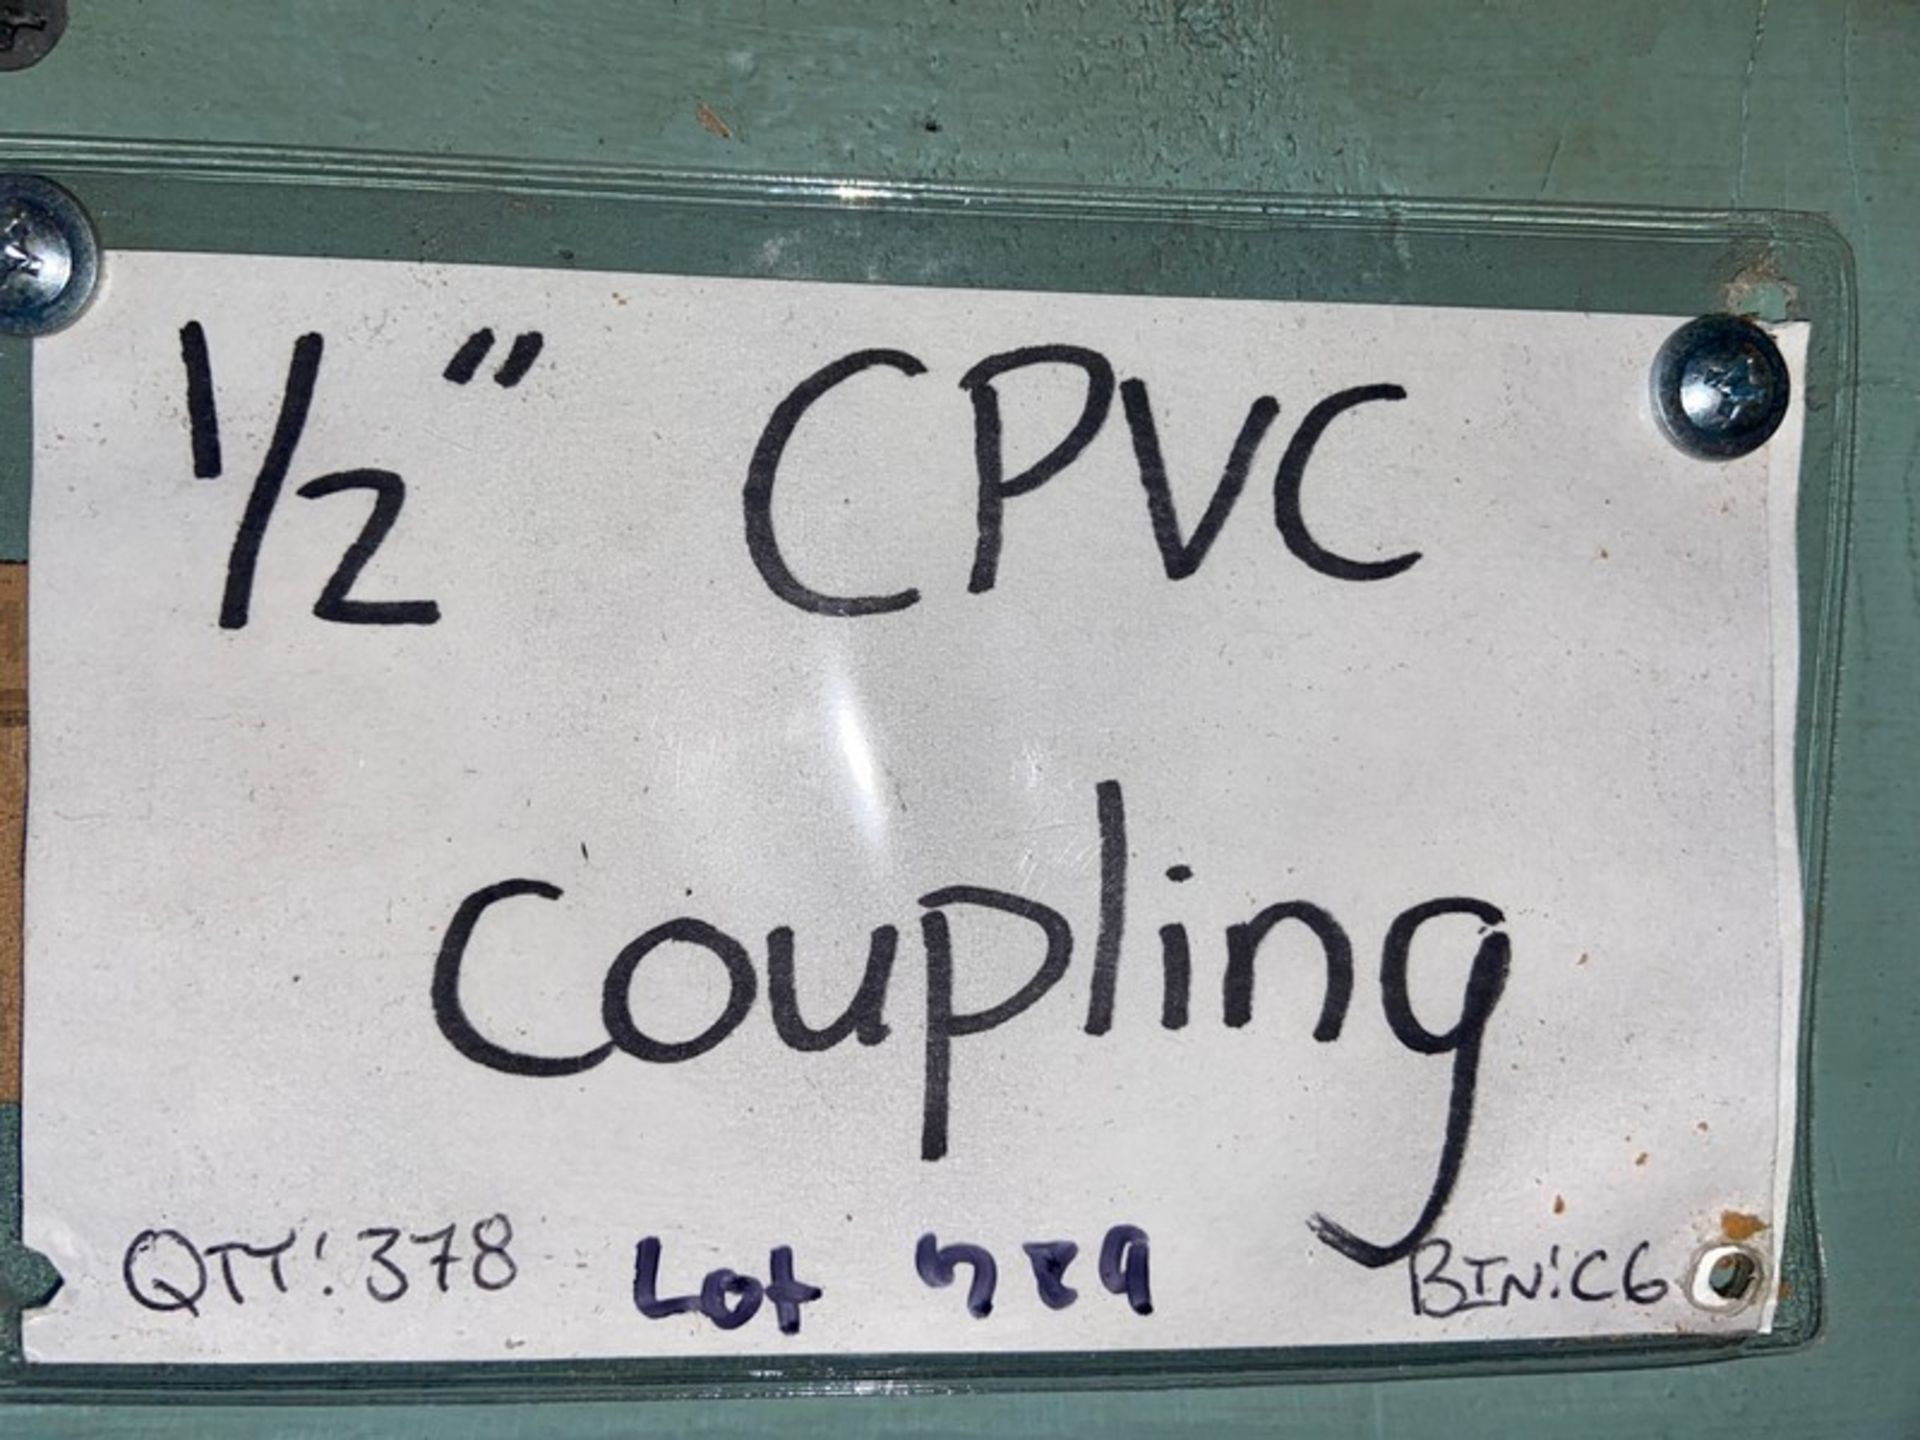 (378) 1/2” CPVC Coupling (Bin:C6) (LOCATED IN MONROEVILLE, PA) - Bild 2 aus 2